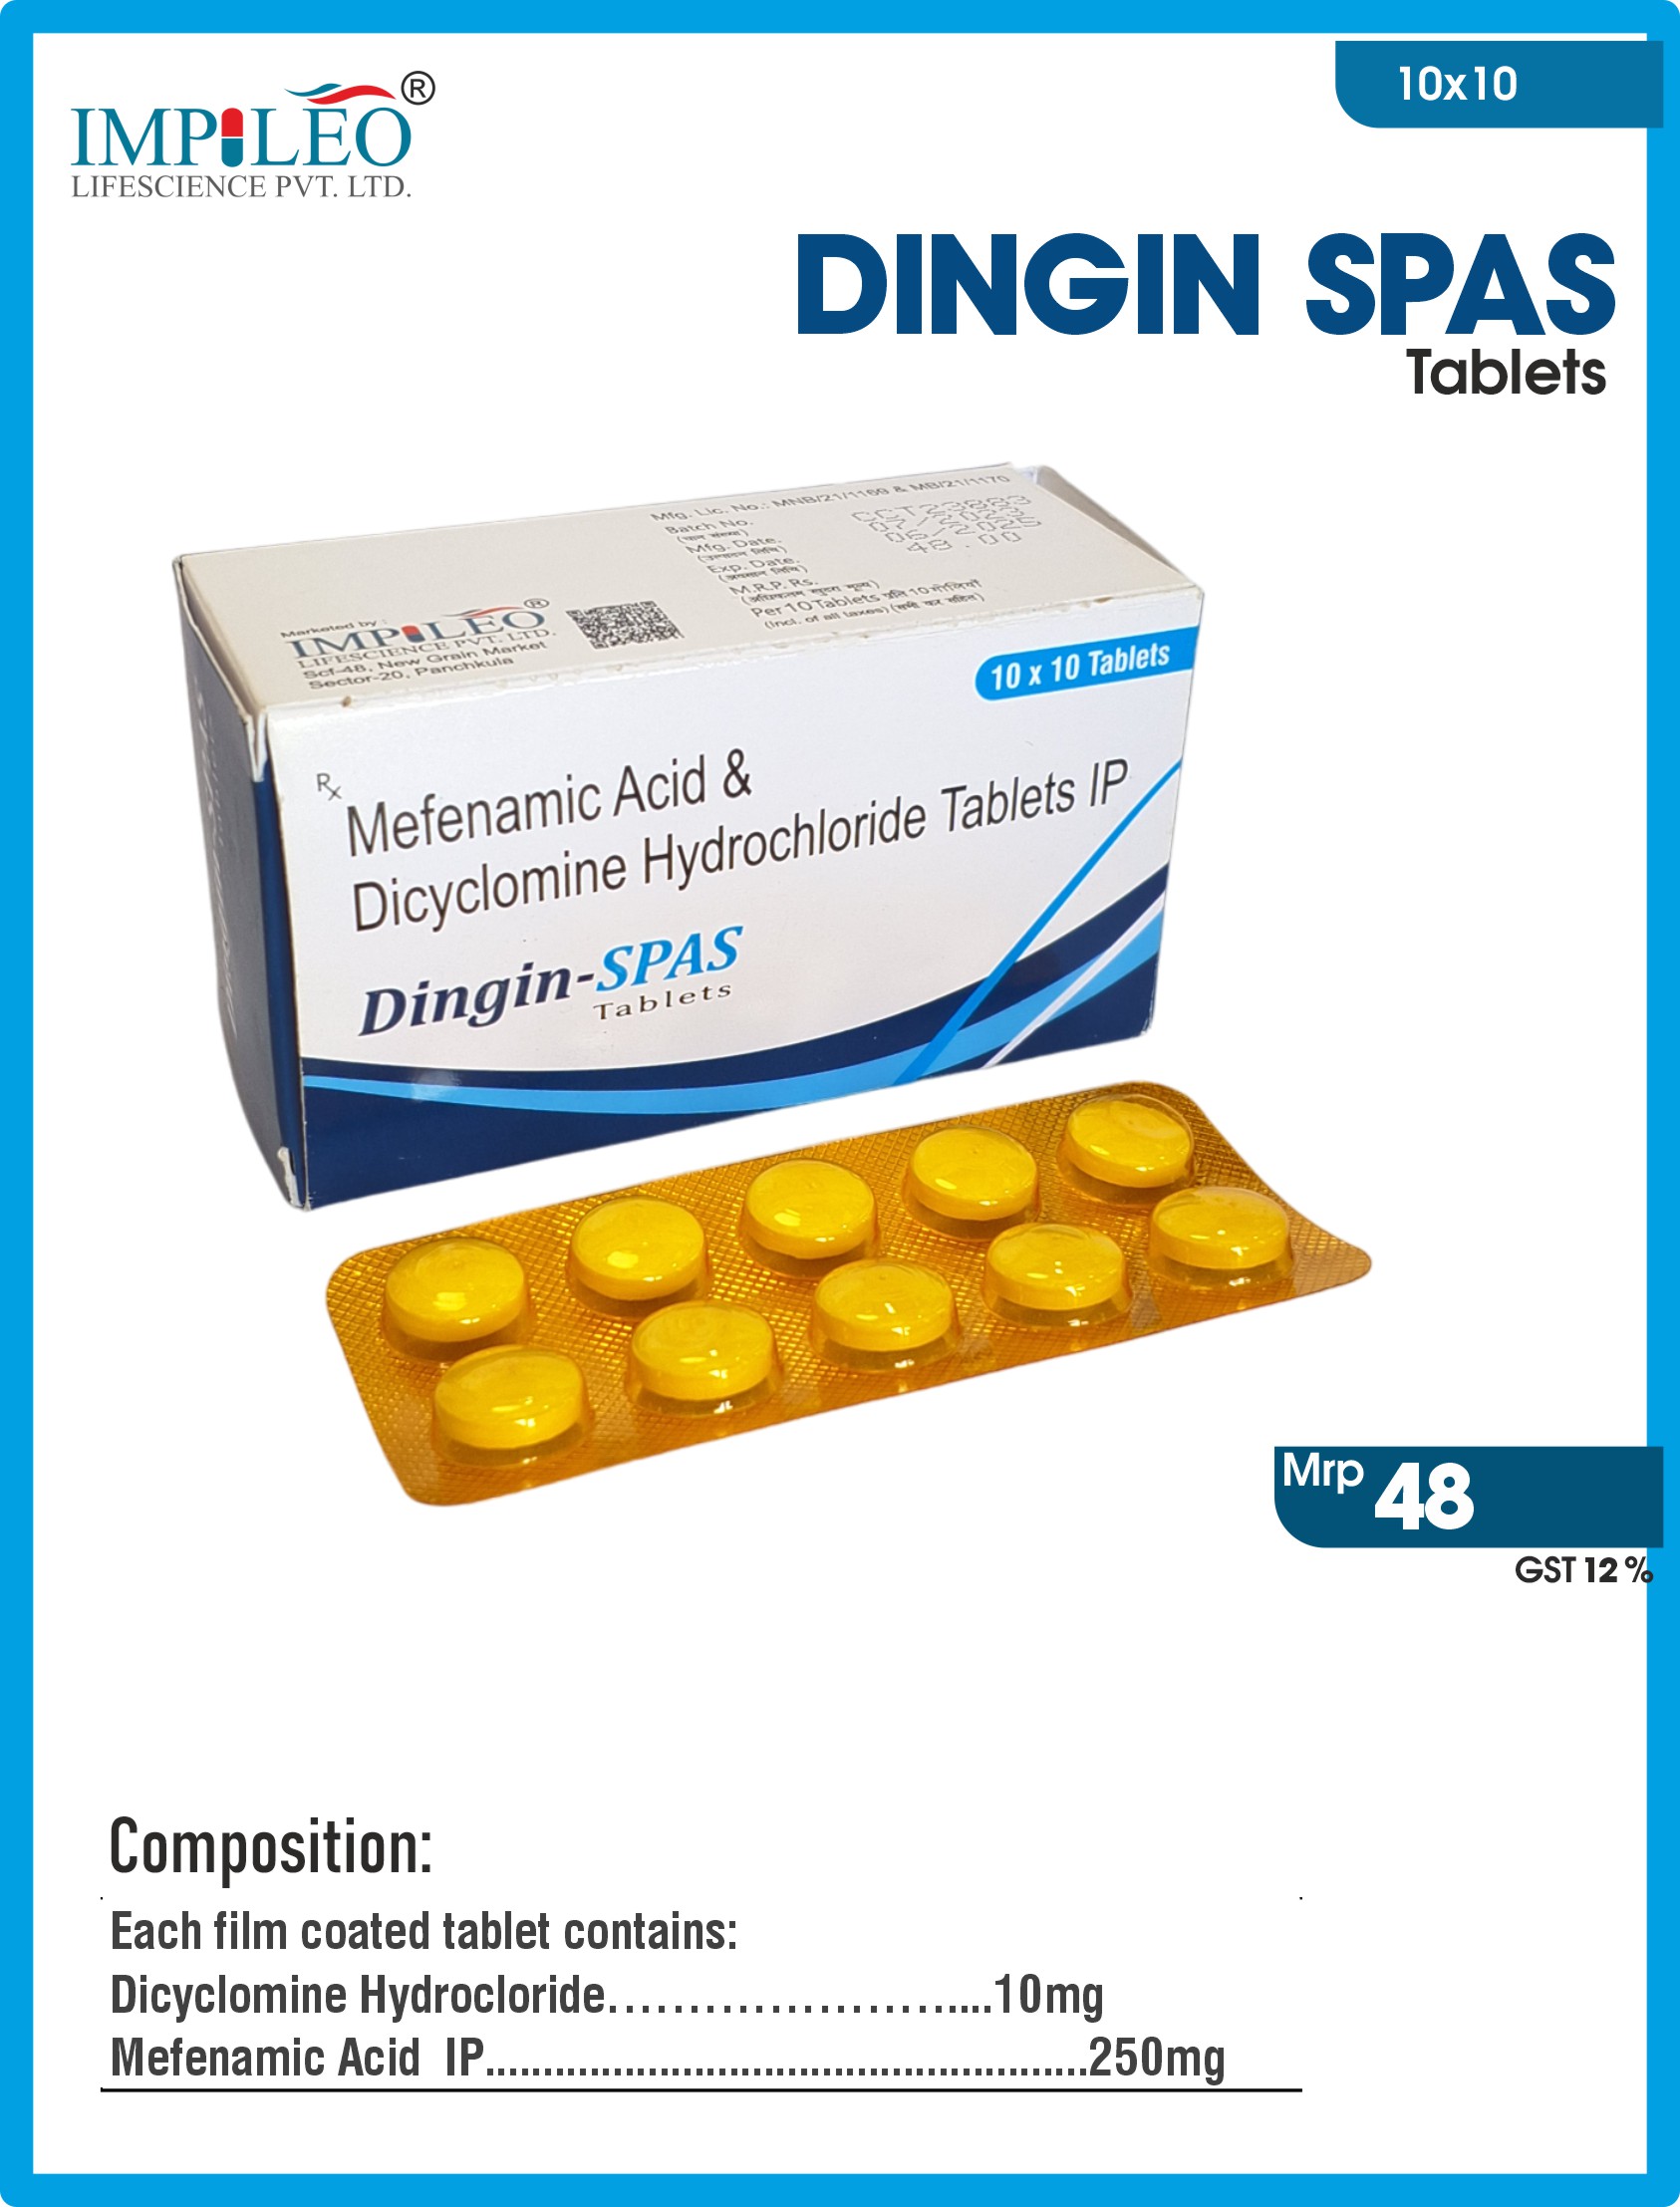 Partner for Success : Prime PCD Pharma Franchise in India for DINGIN SPAS ™ (Dicyclomine Hydrochloride & Mefenamic Acid) Tablets